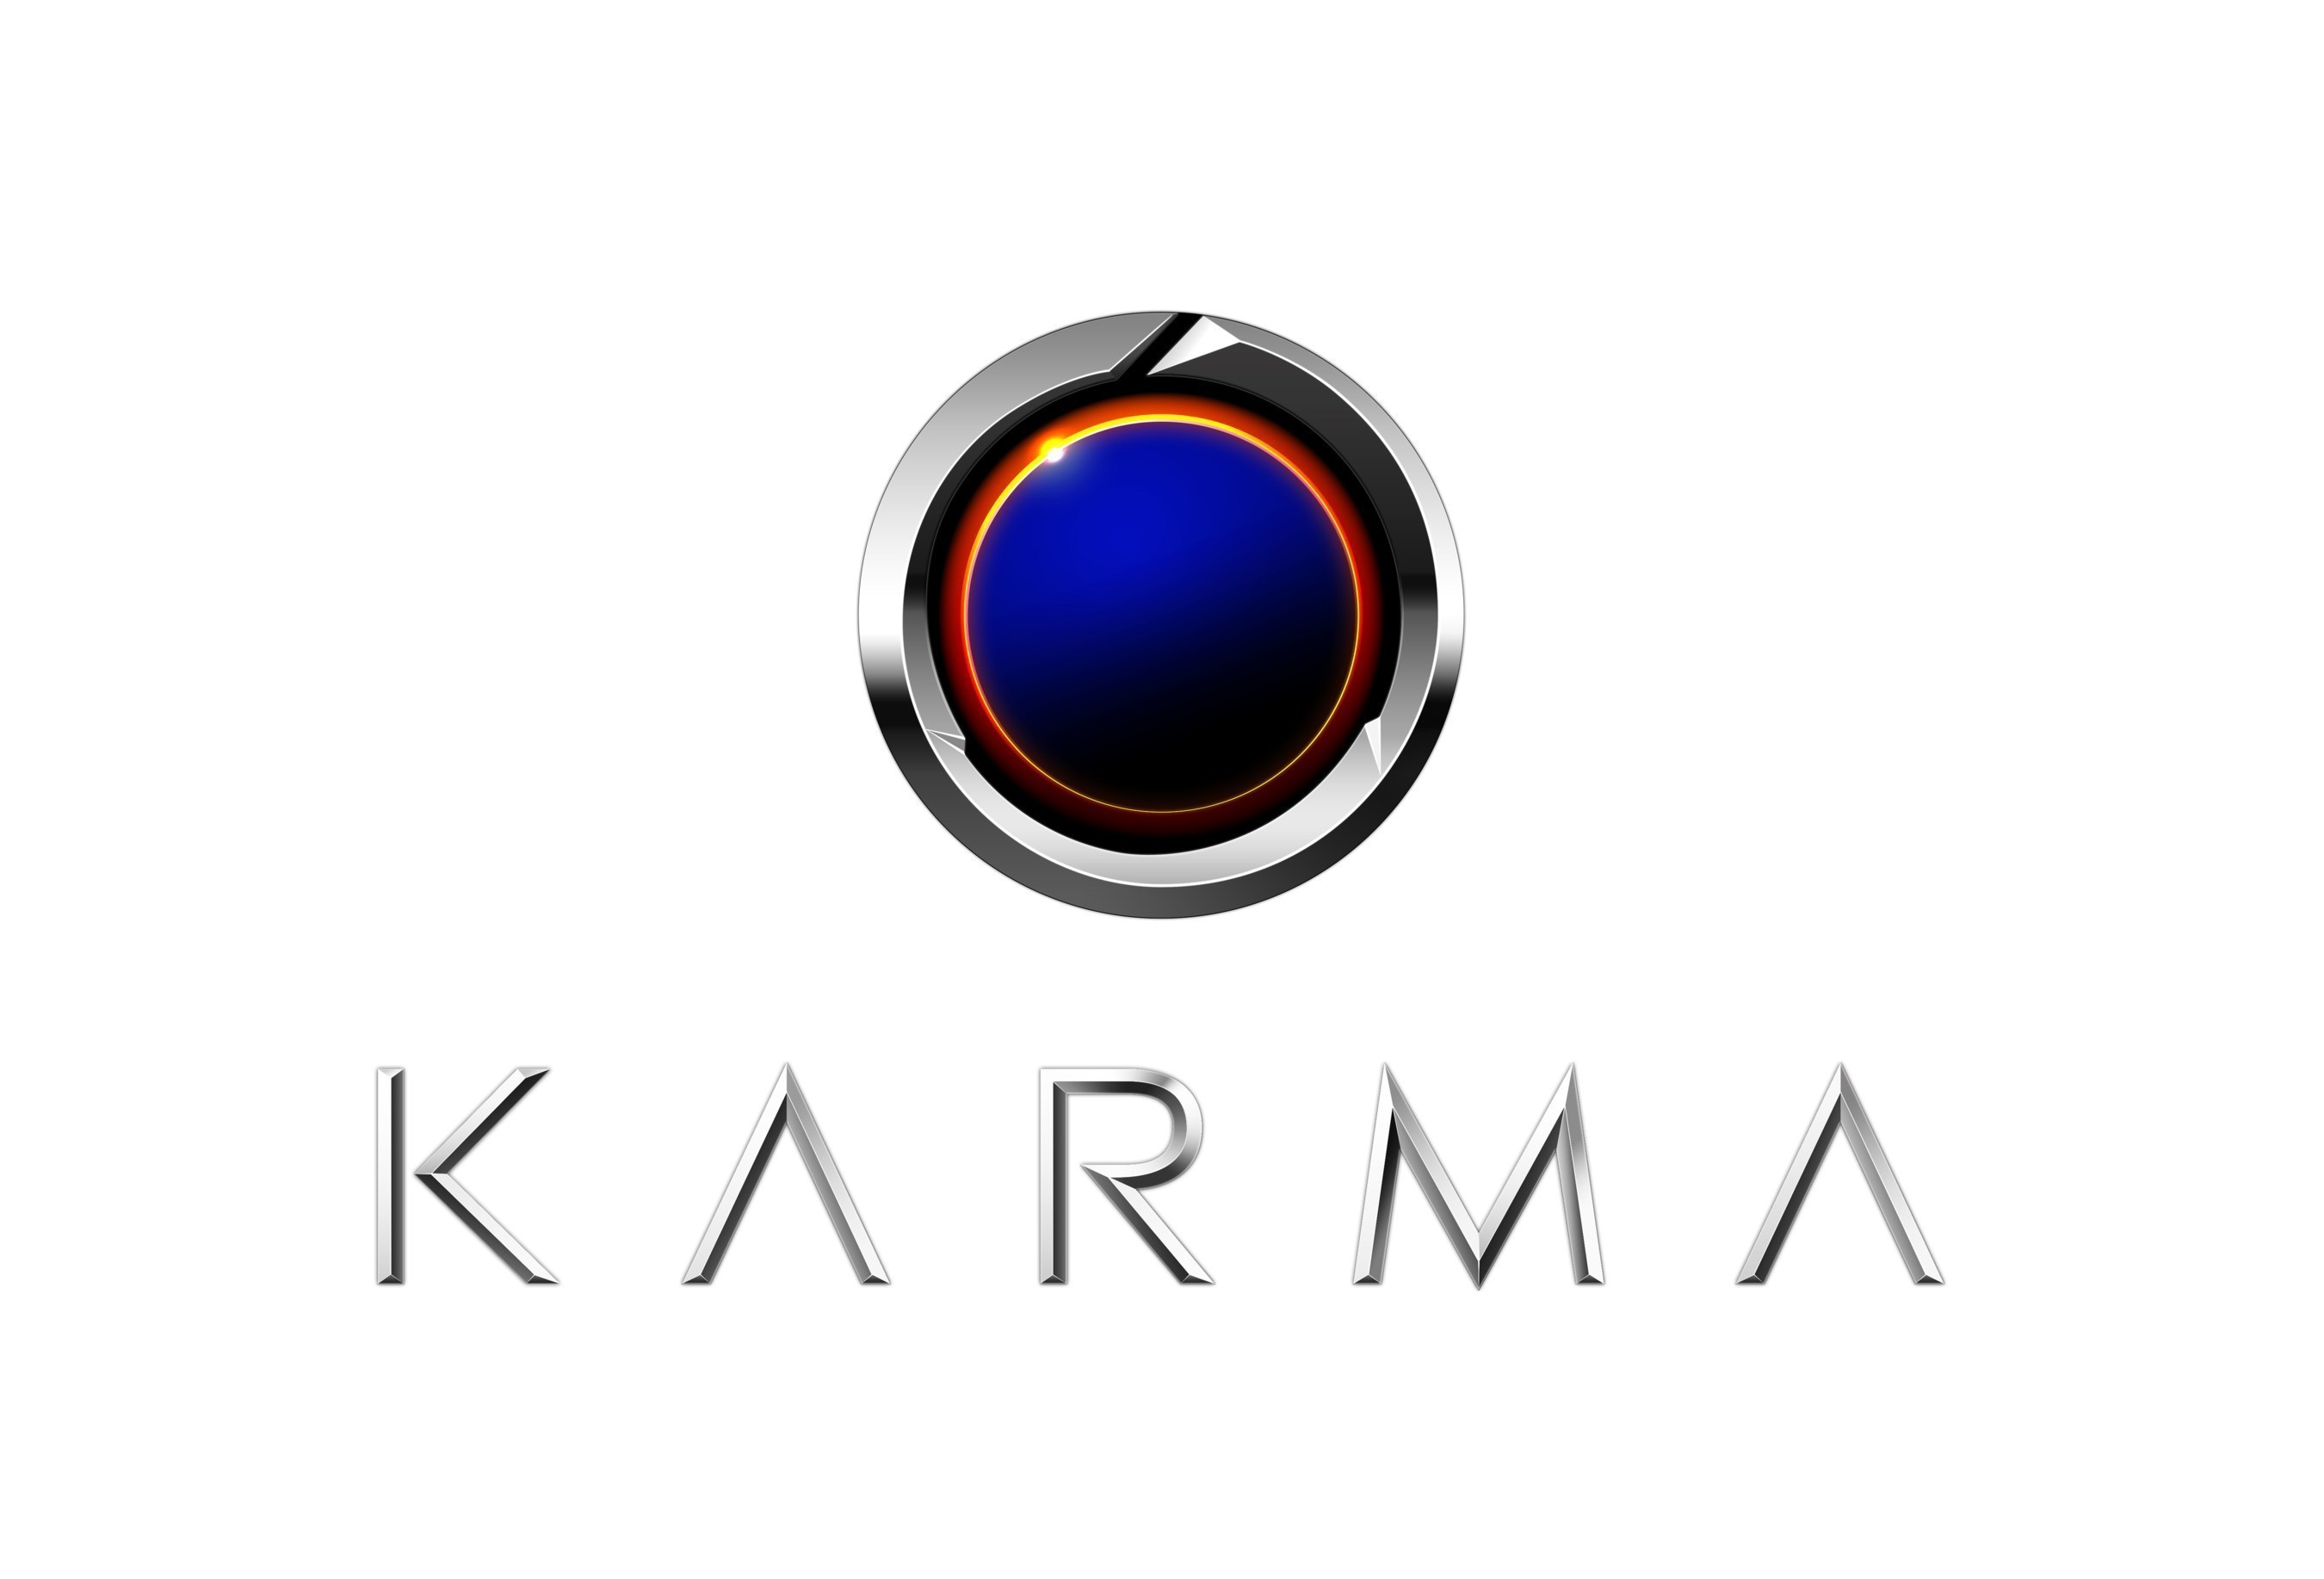 Karma Automotive Unveils 2017 Revero Luxury Vehicle